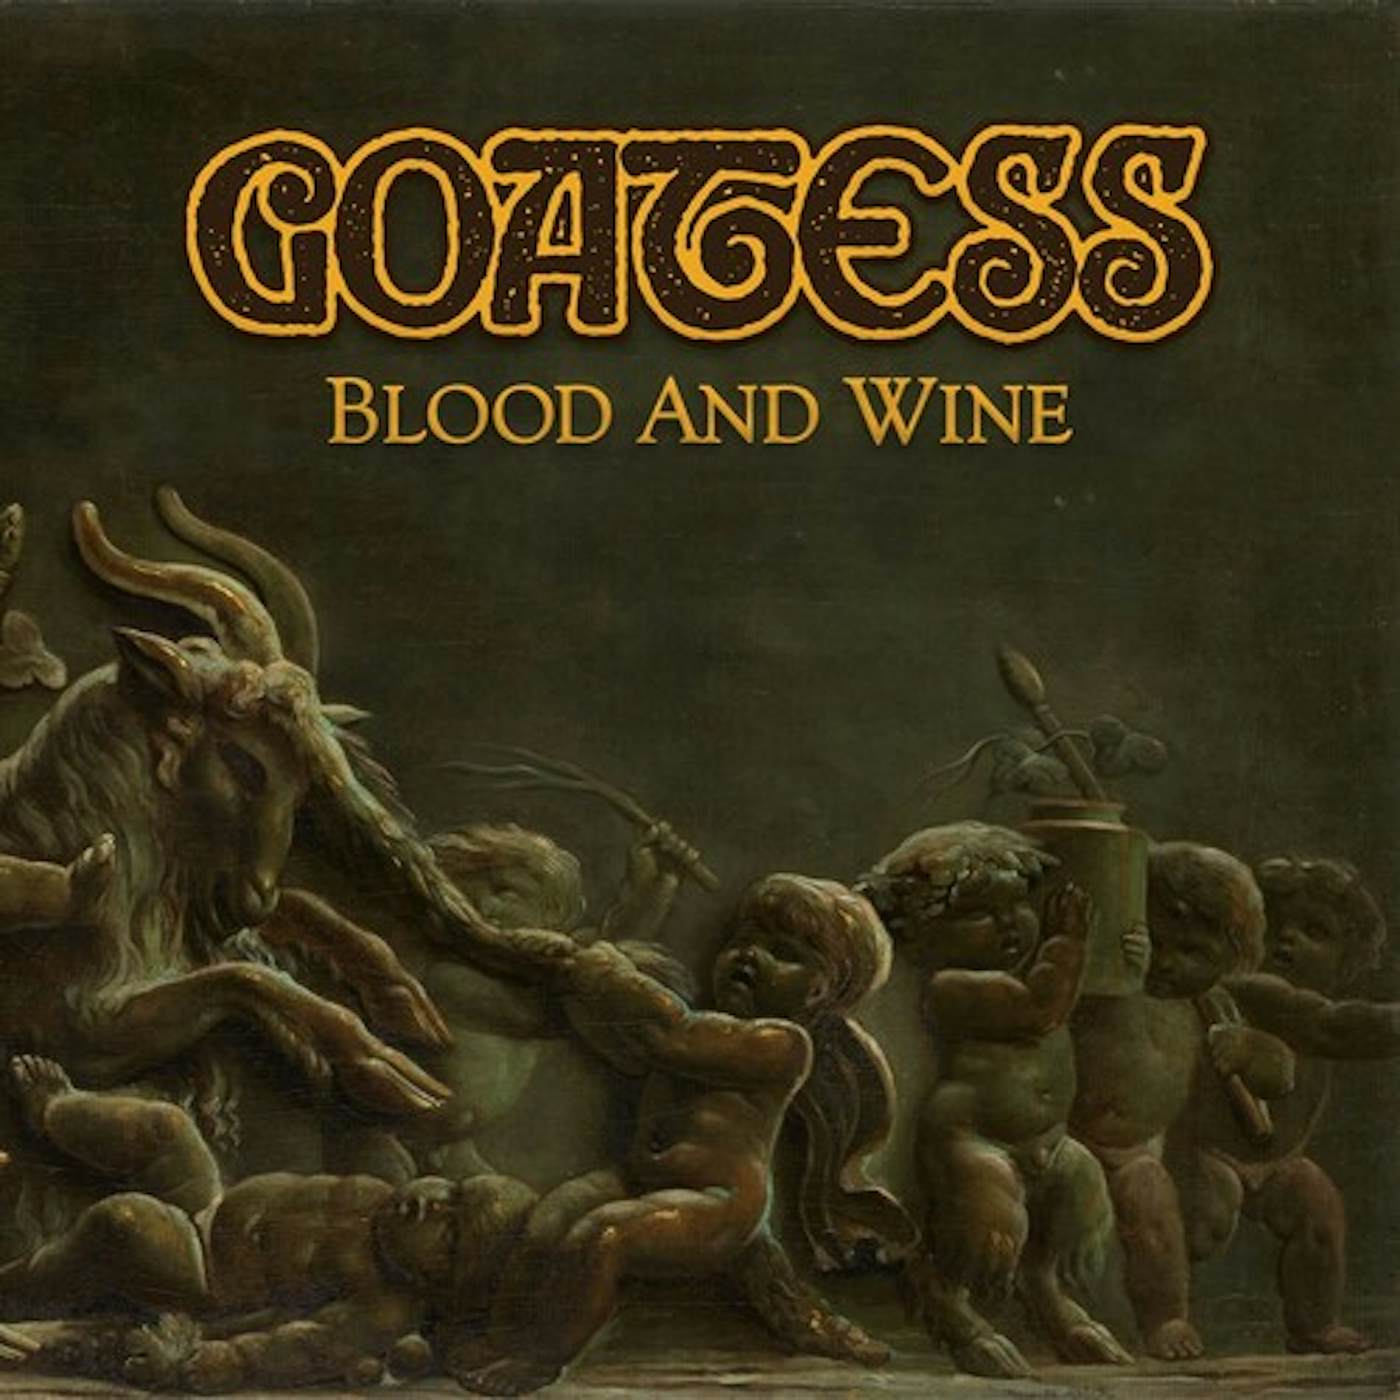 Goatess Blood and Wine Vinyl Record